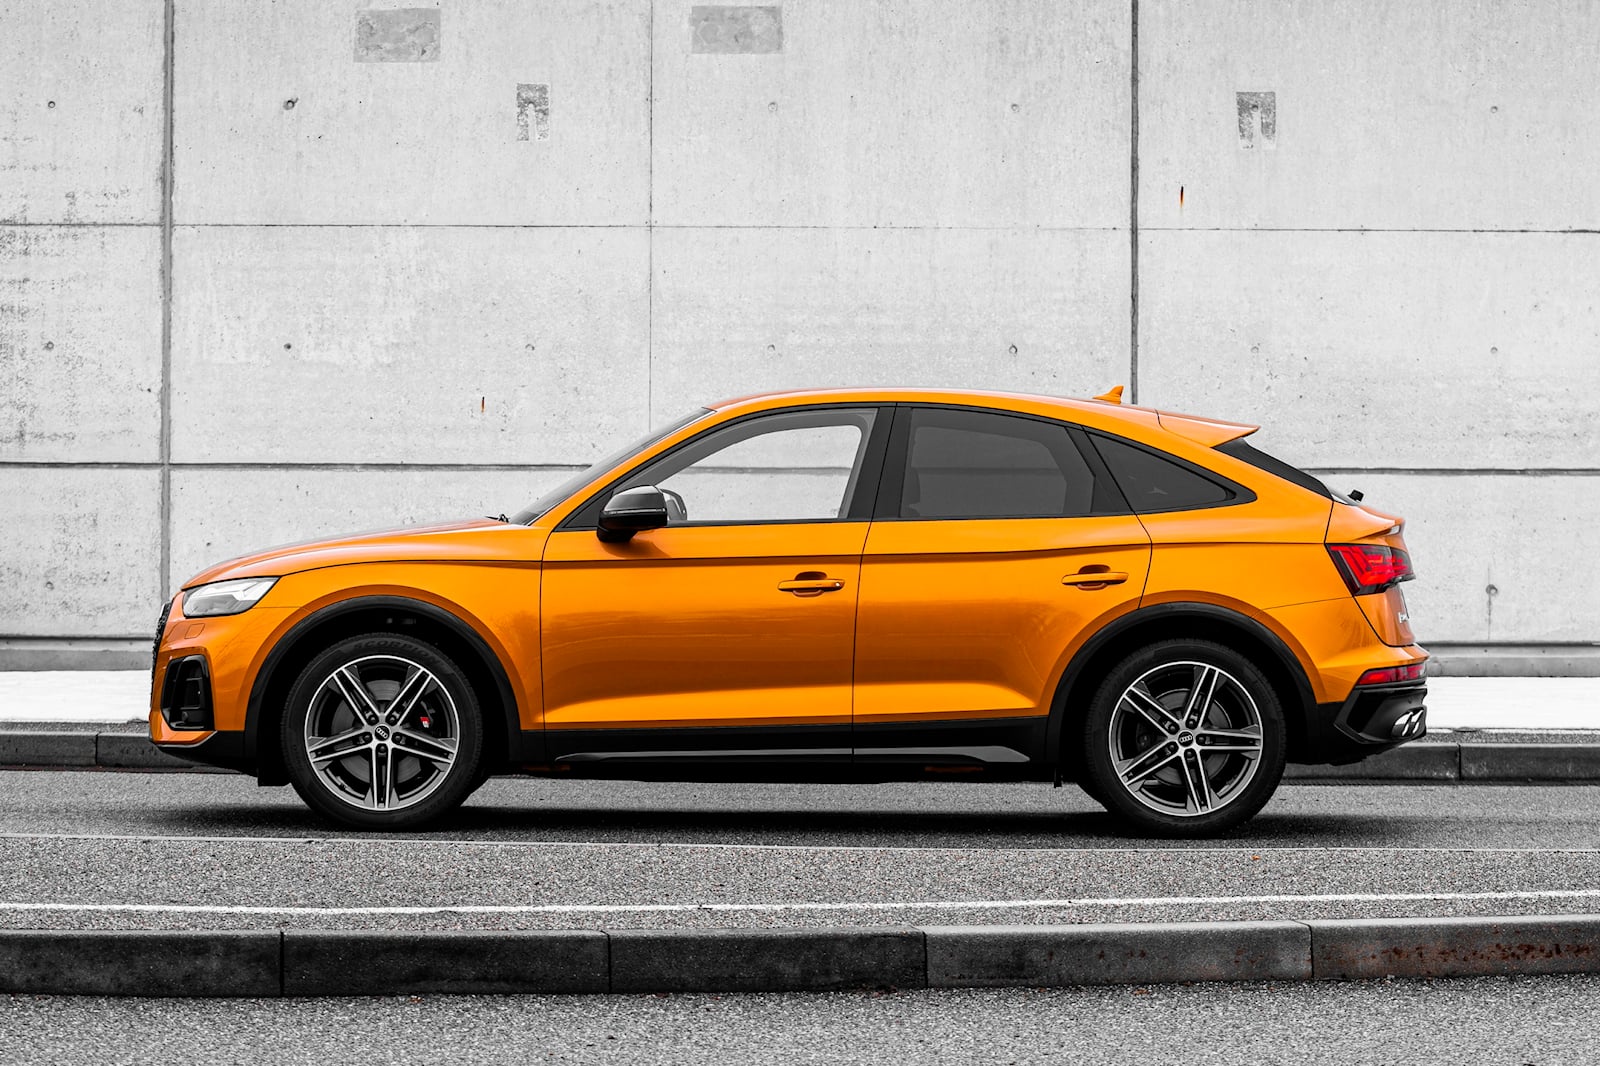 2023 Audi SQ5 Exterior Colors & Dimensions: Length, Width, Tires